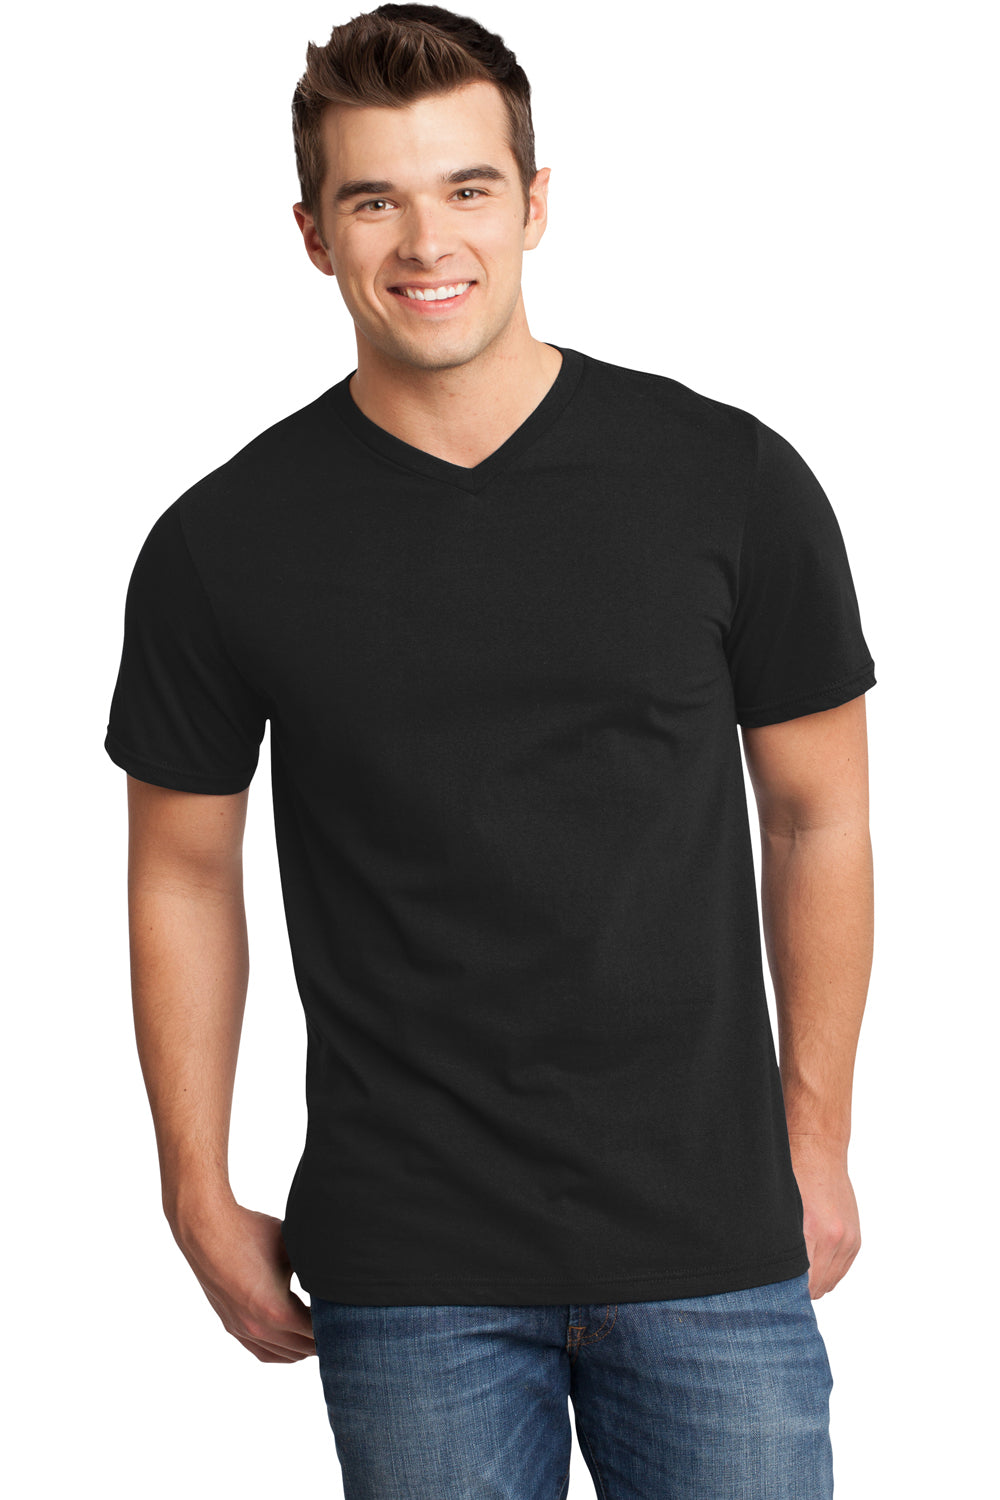 District DT6500 Mens Very Important Short Sleeve V-Neck T-Shirt Black Front